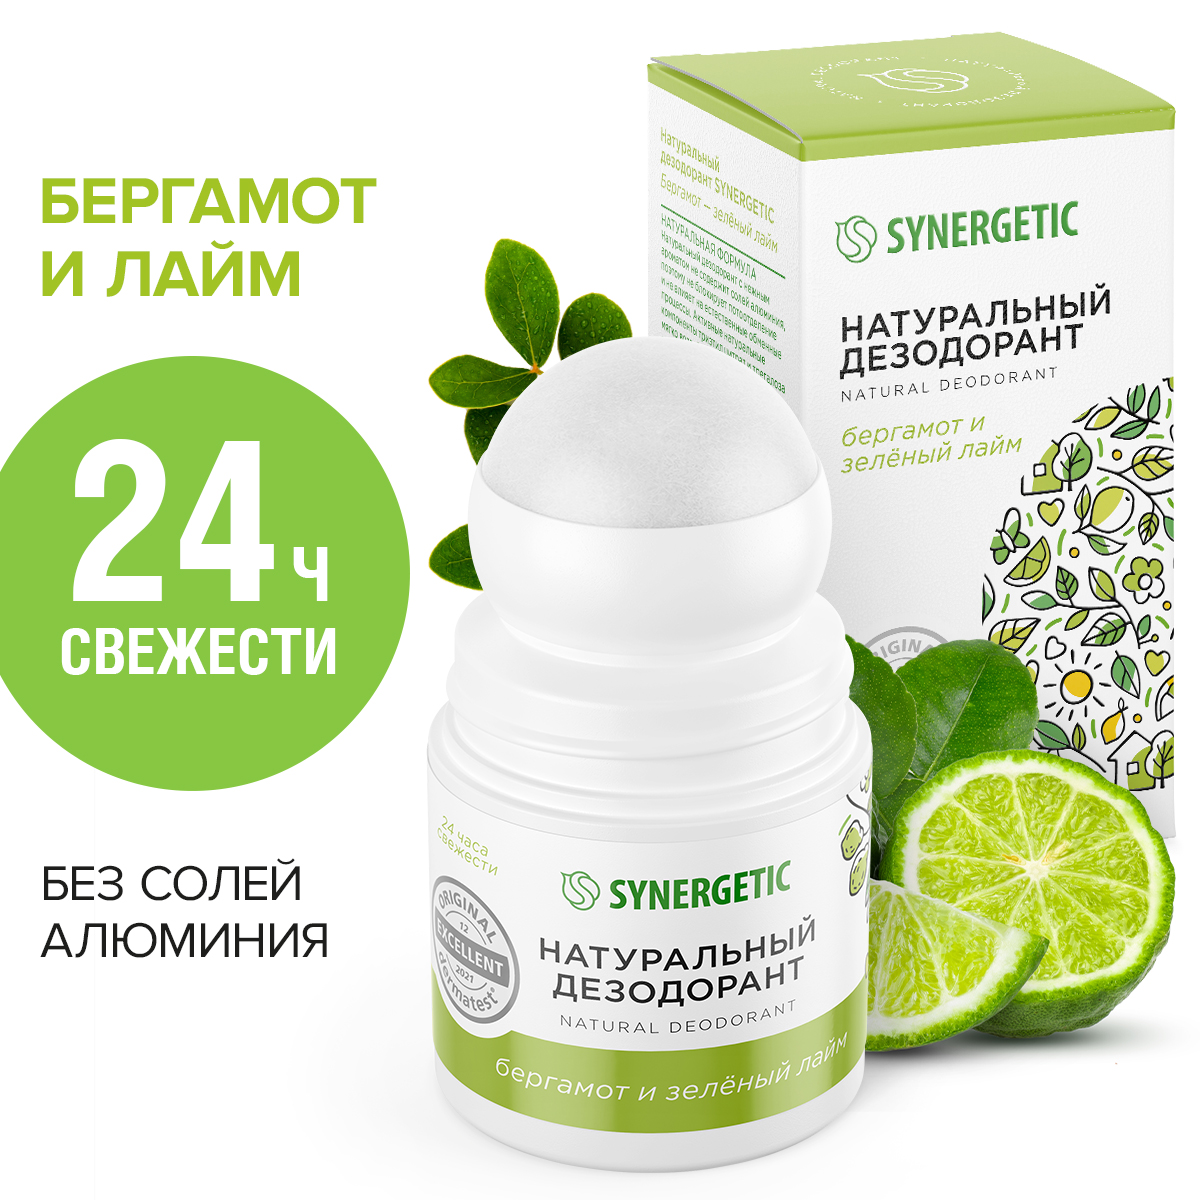 Дезодорант Synergetic бергамот-зеленый лайм, натуральный, 50 мл synergetic натуральный дезодорант лемонграсс эвкалипт 50